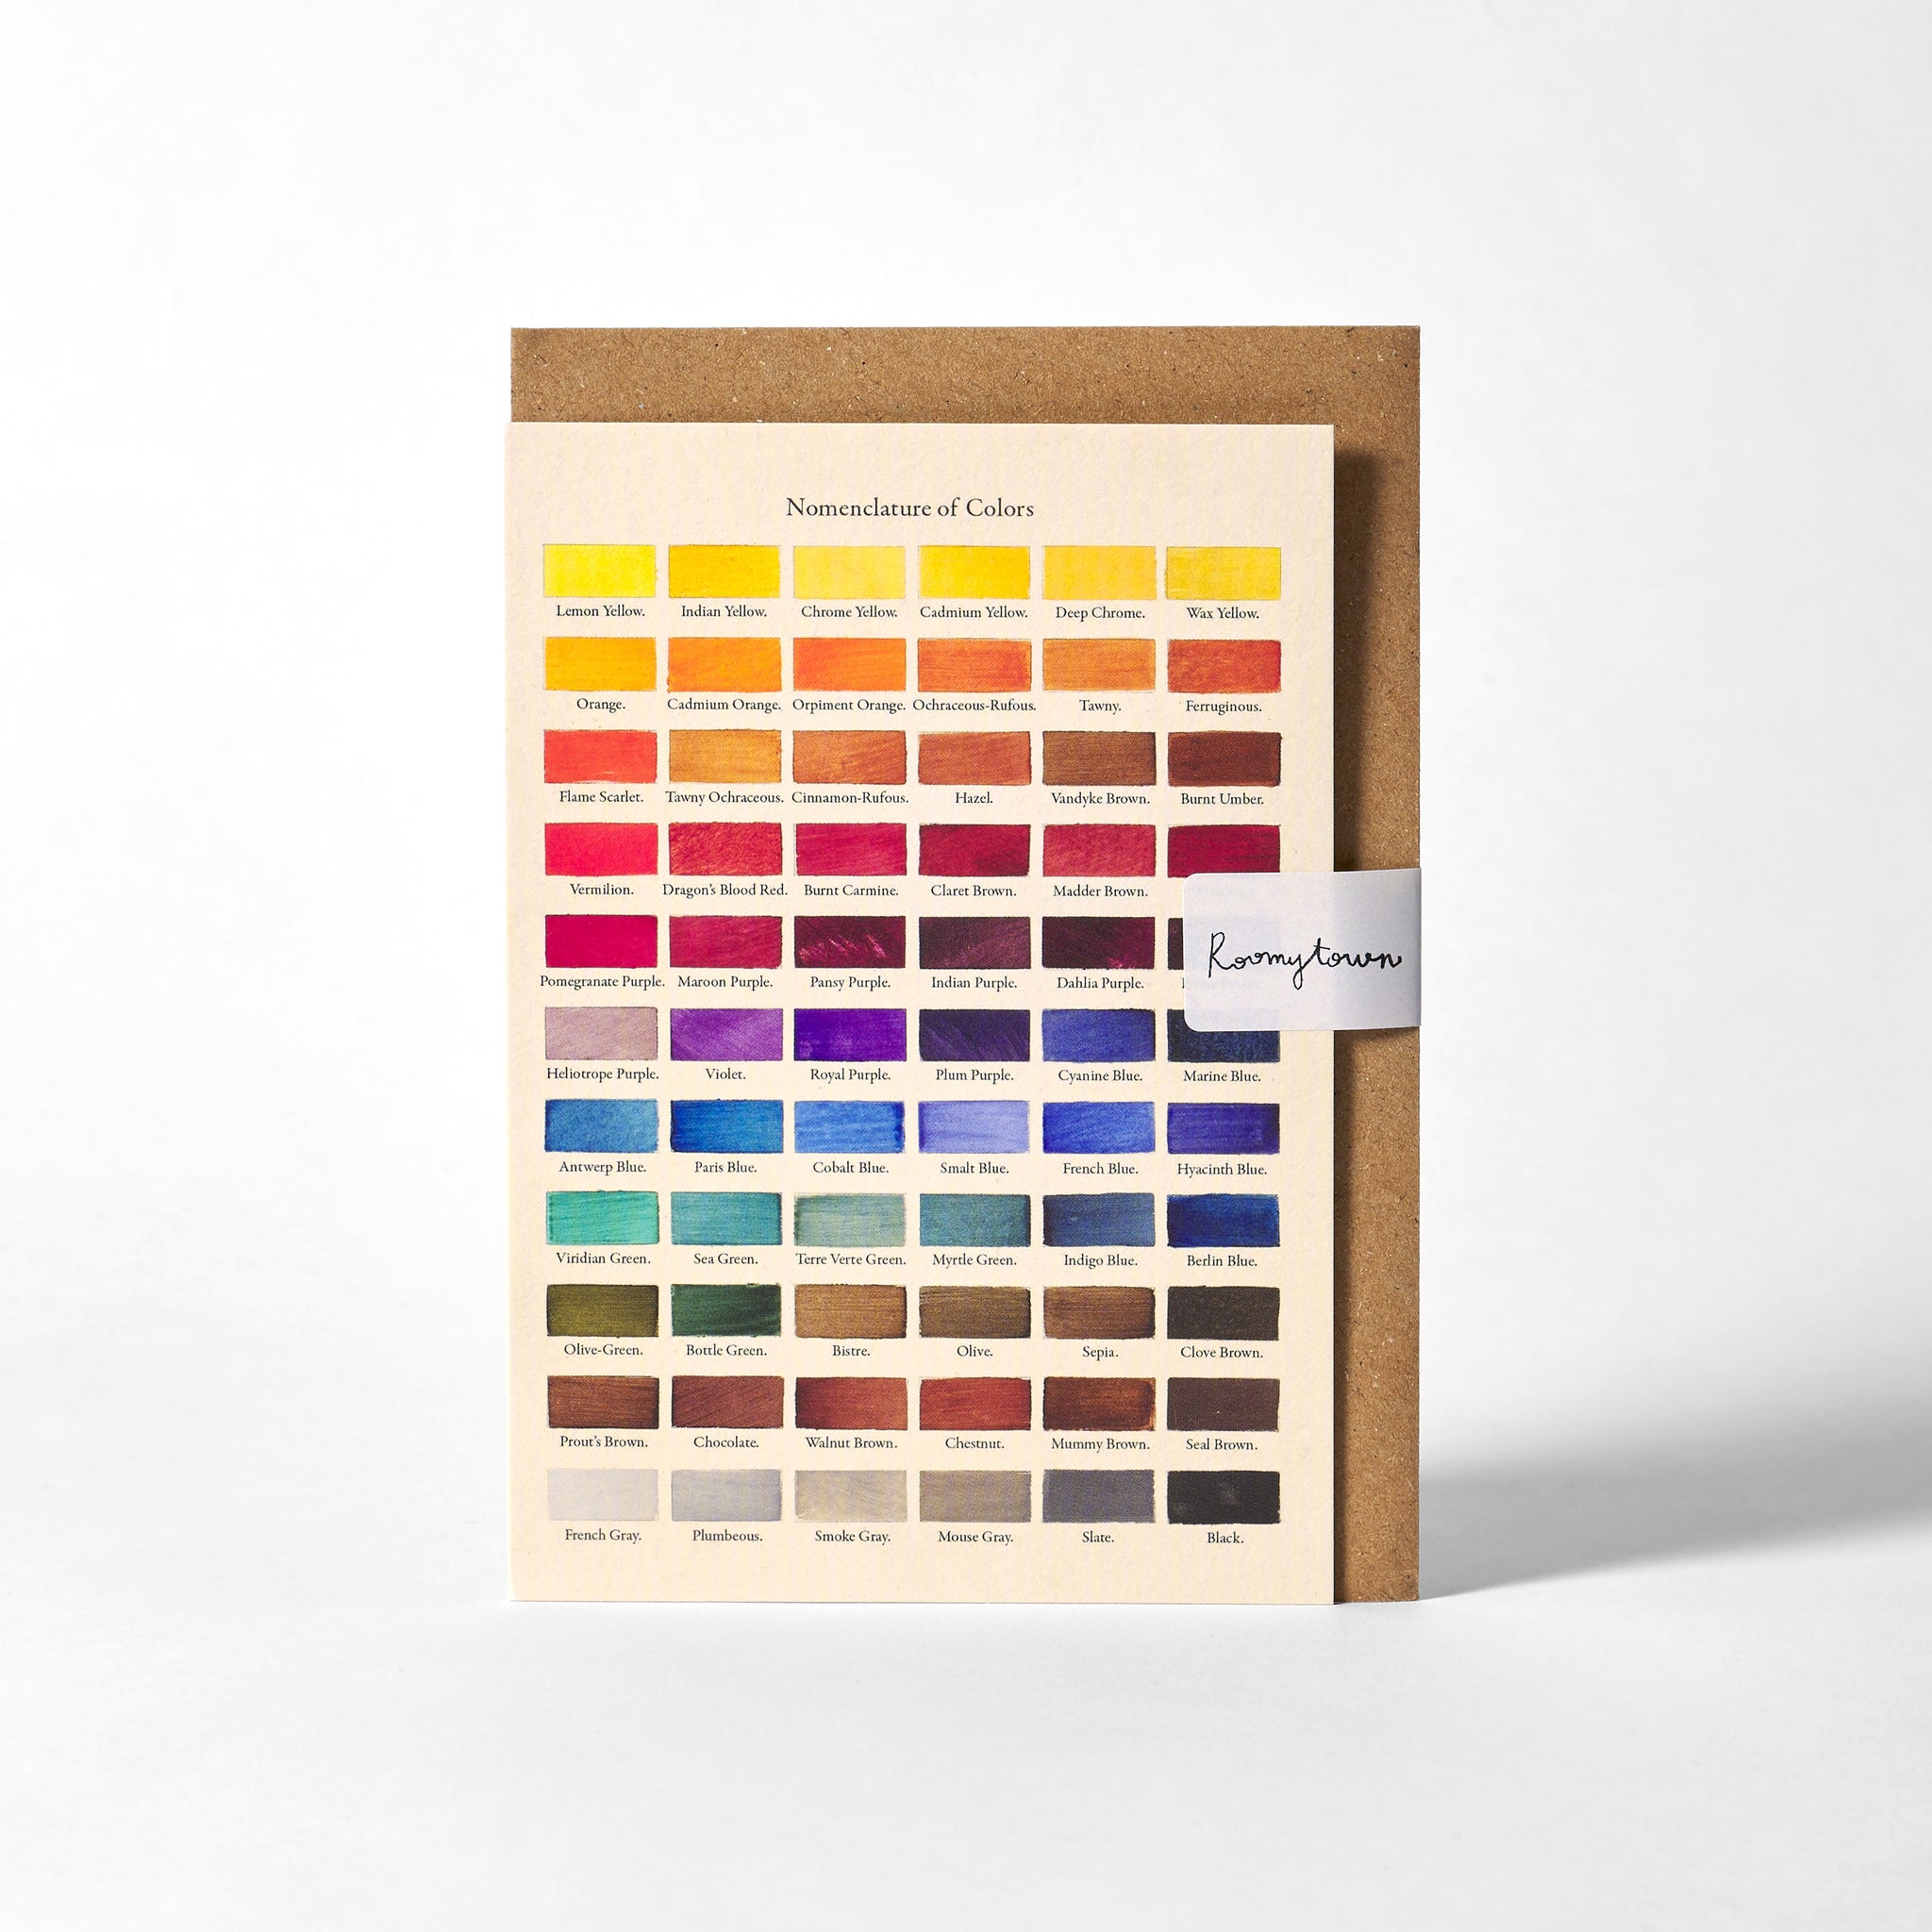 Greetings Card - Nomenclature of Colors